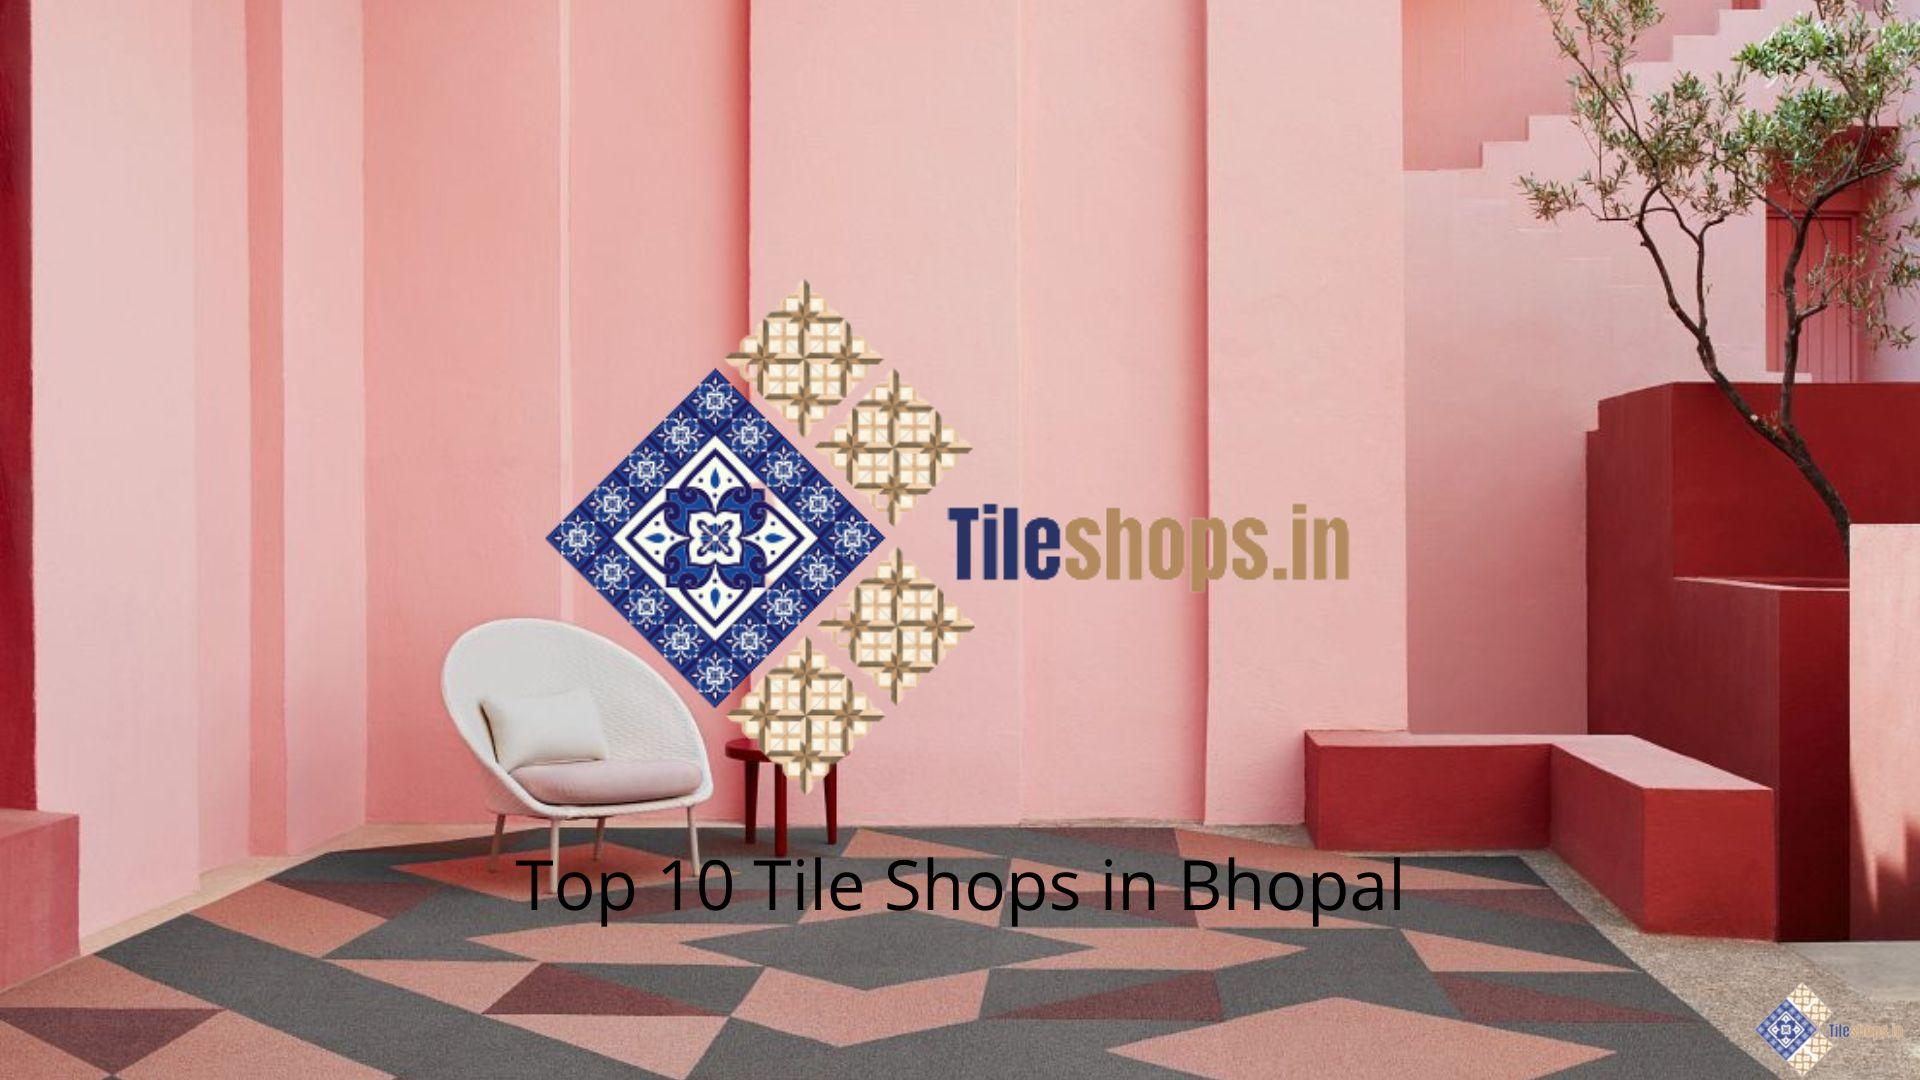 Top 10 Tile Shops in Bhopal